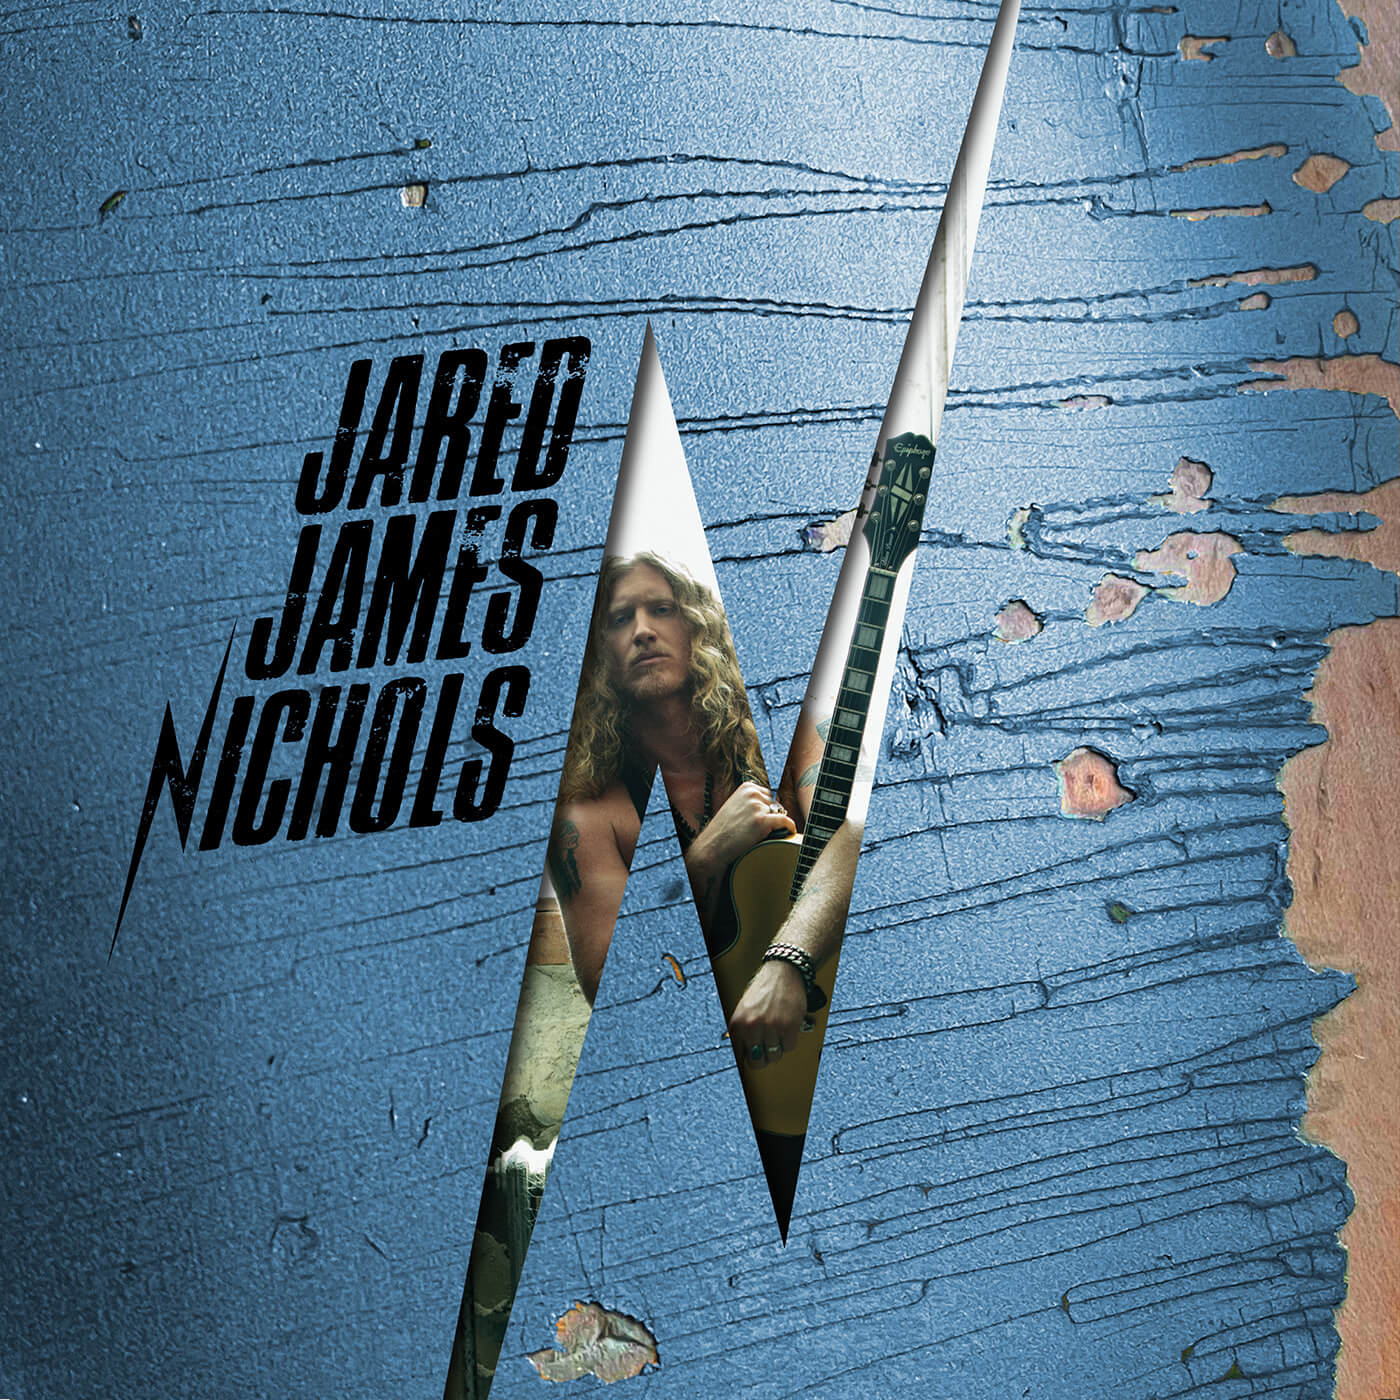 Jared James Nichols - Self-Titled